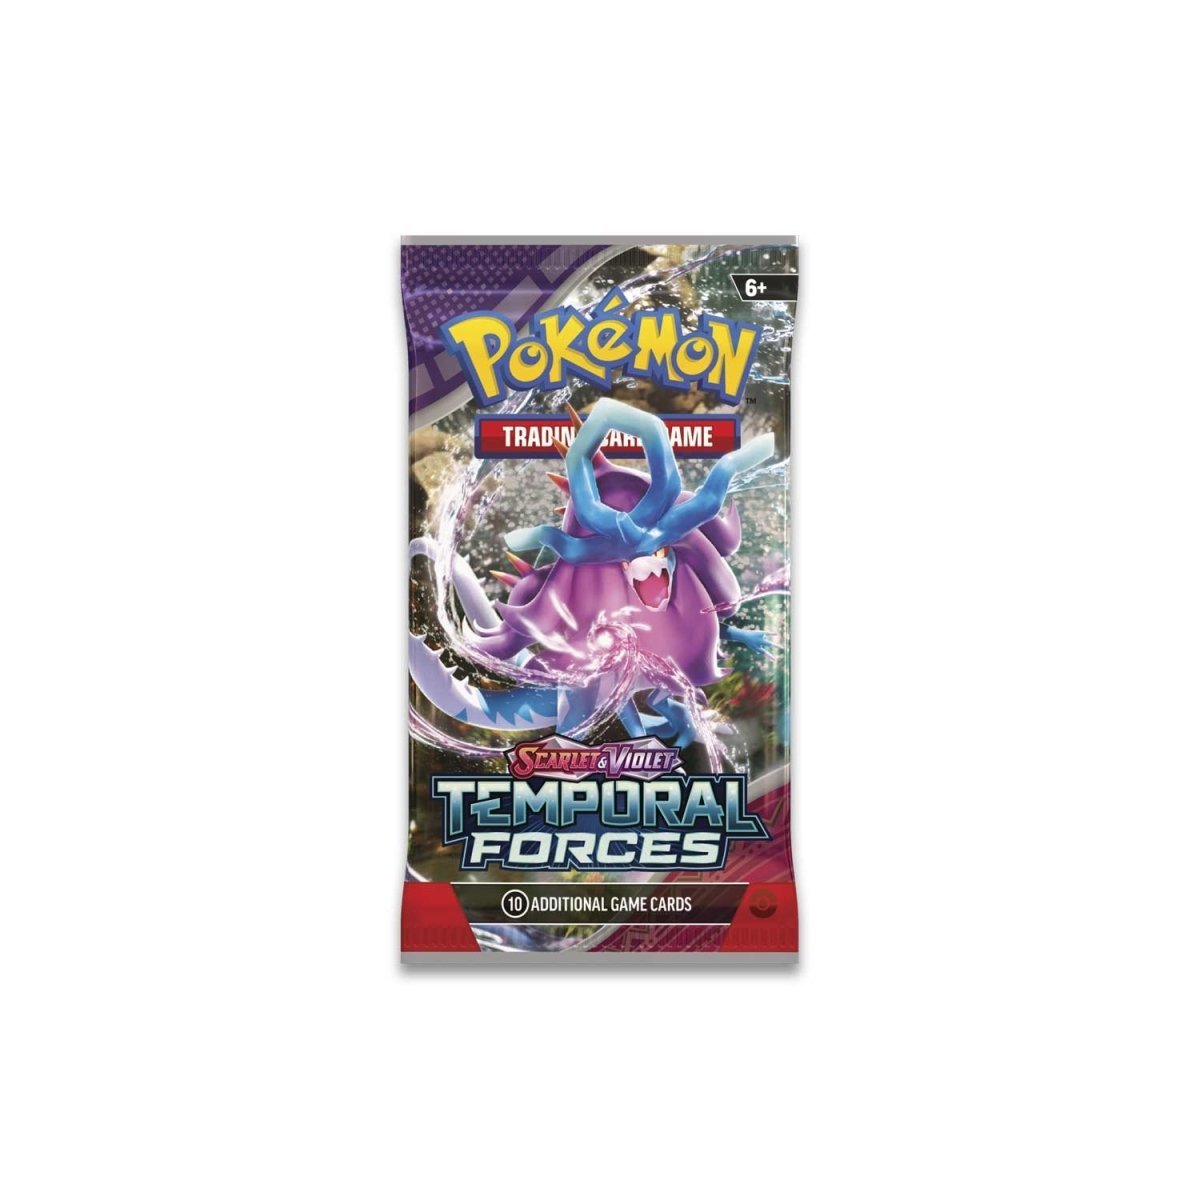 Pokémon TCG: SV - Temporal Forces Sleeved Booster Pack (10 Cards) - PokeRvmbooster pack